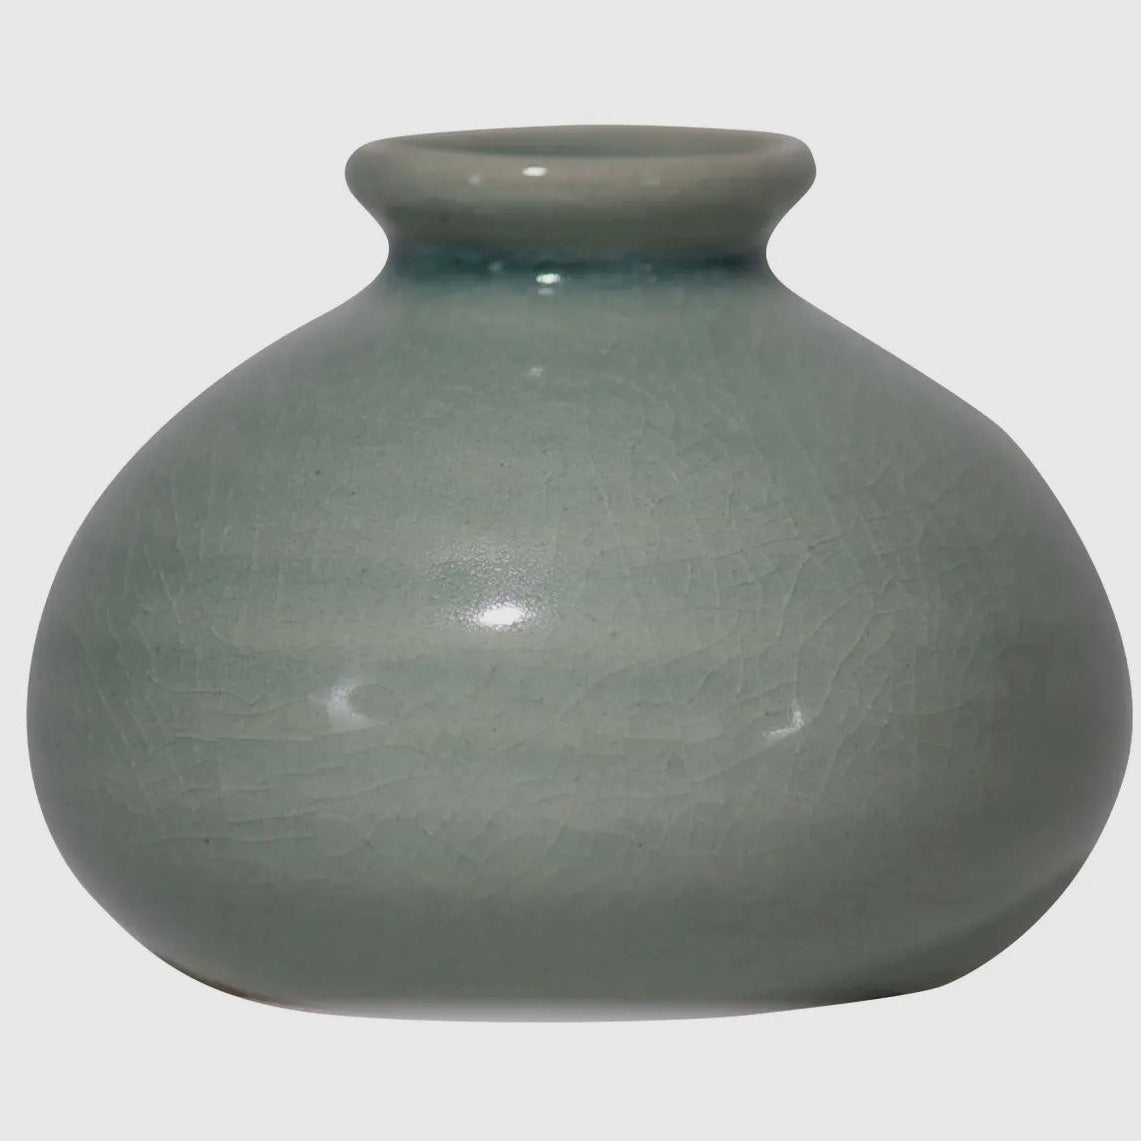 A simple blue-green crackle glaze adorns the ribbed bud vase shape. 